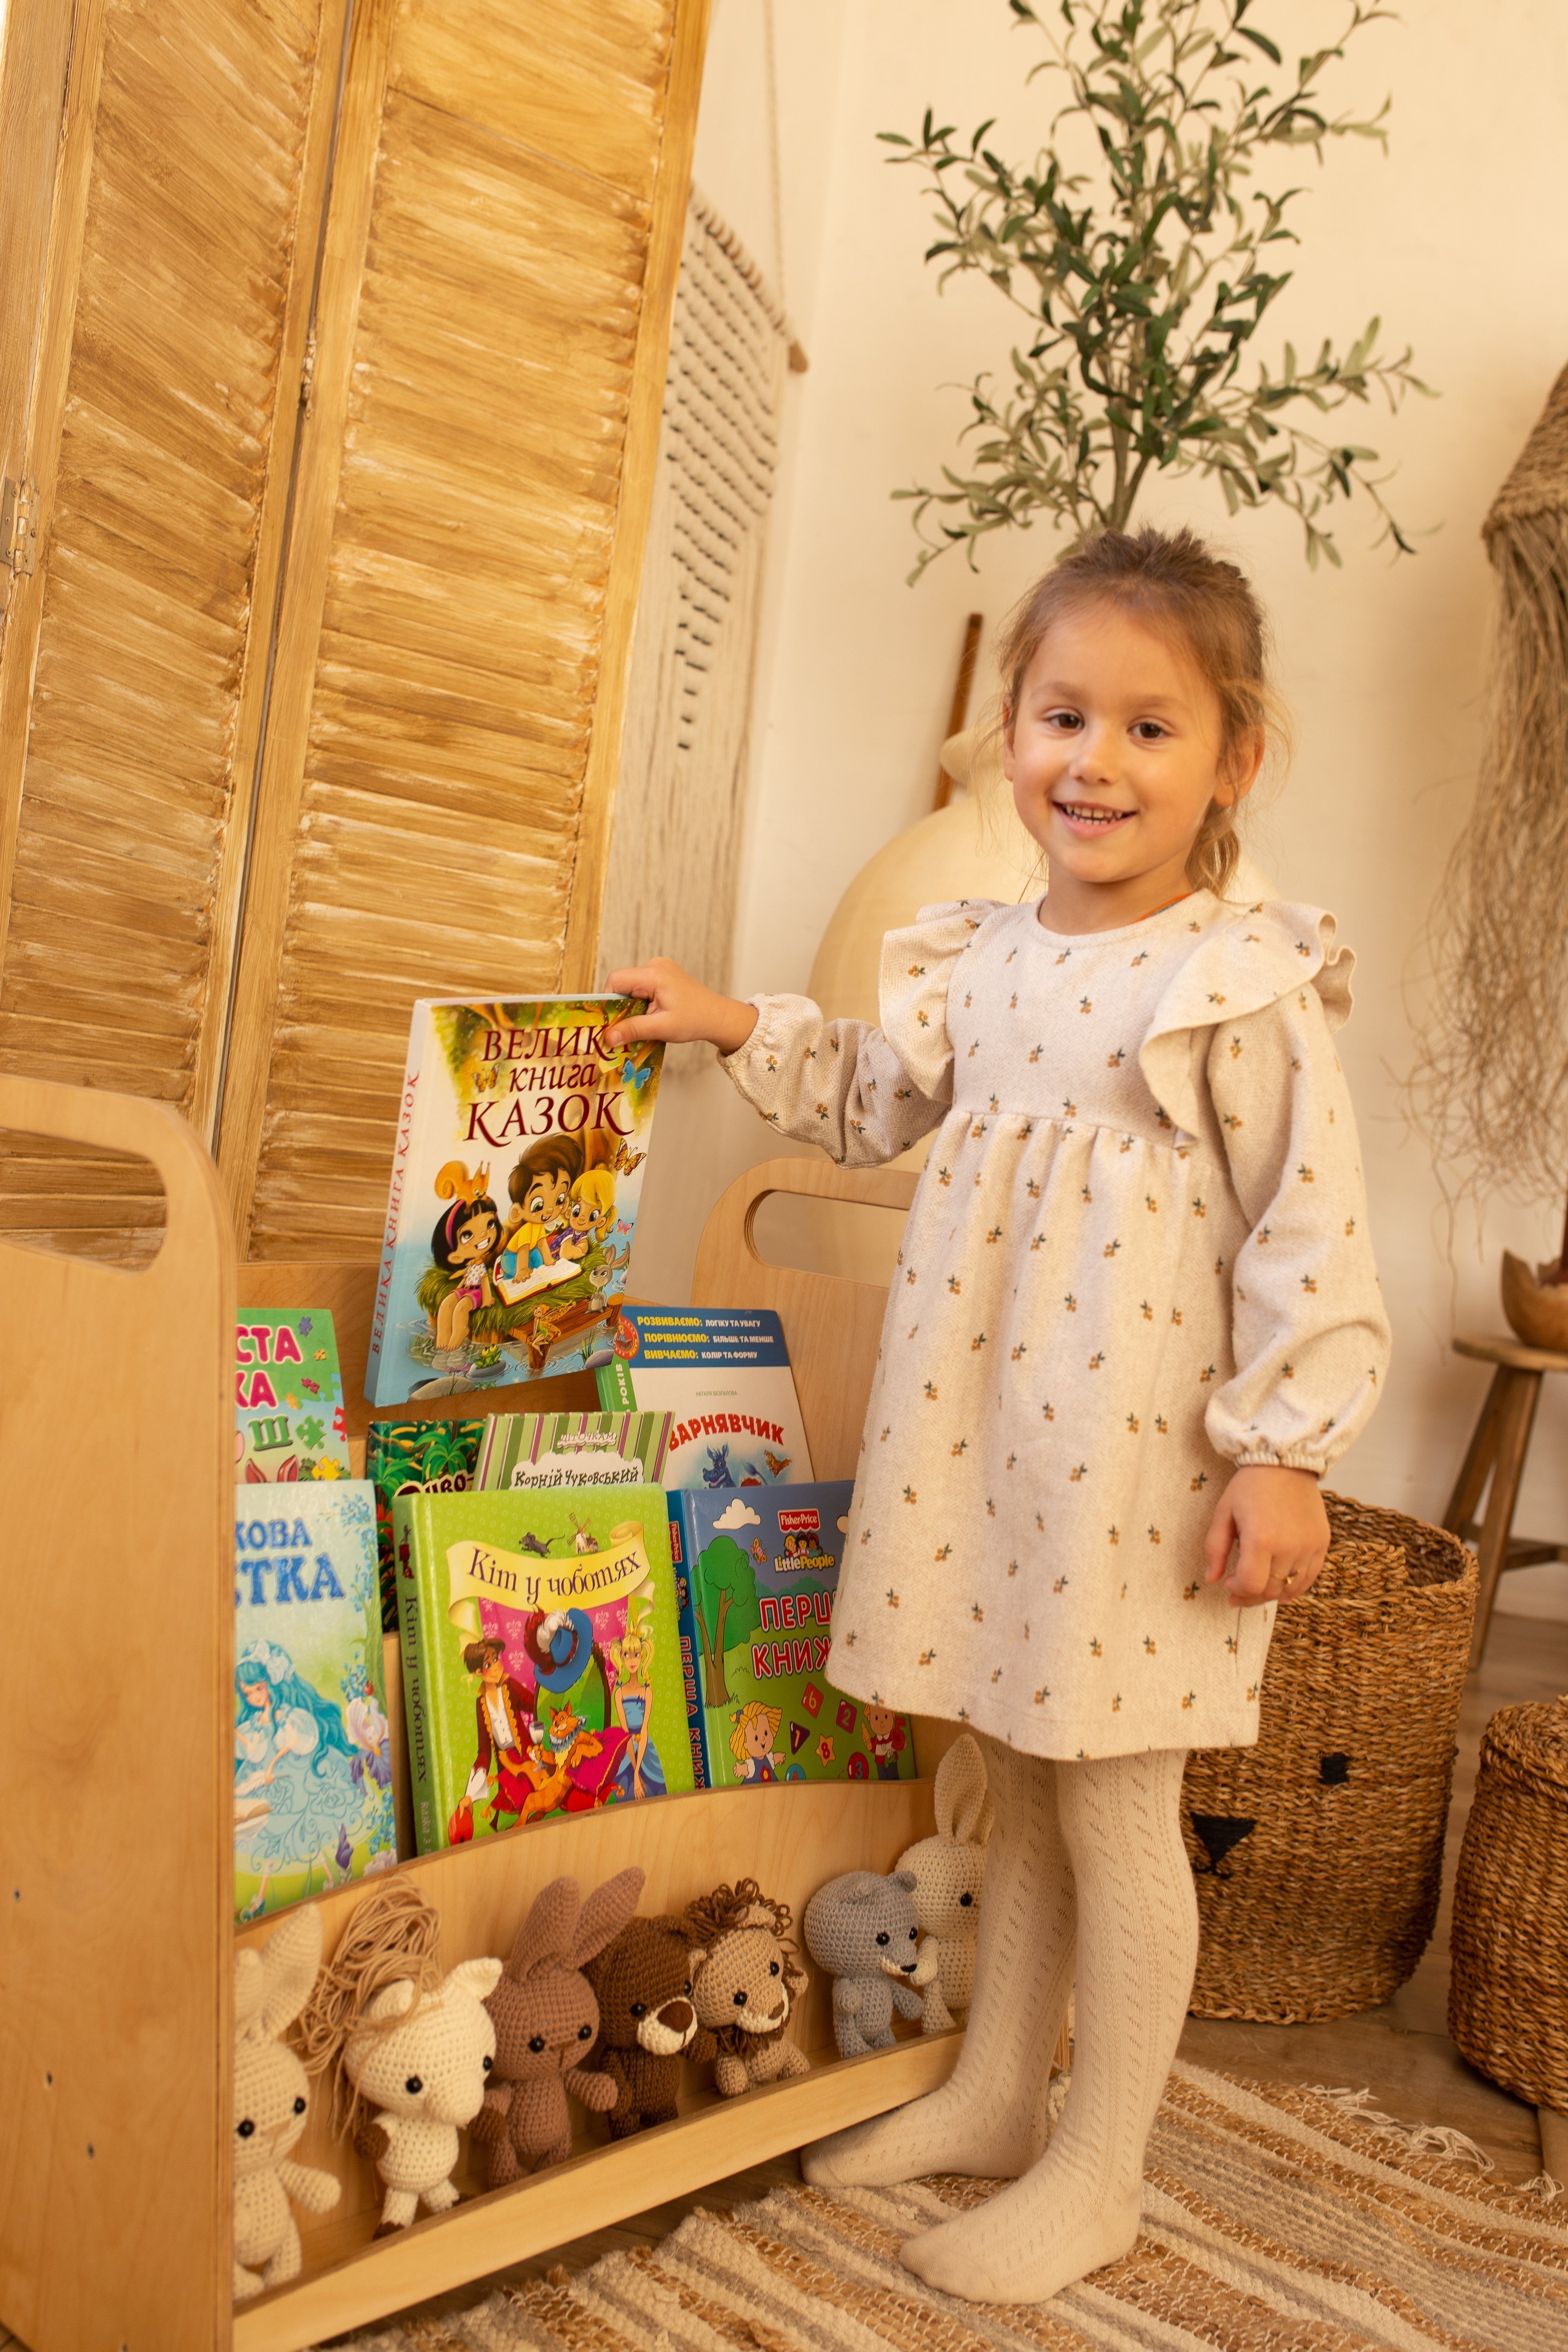 Goodevas Montessori Wooden Bookshelf in Natural Wood